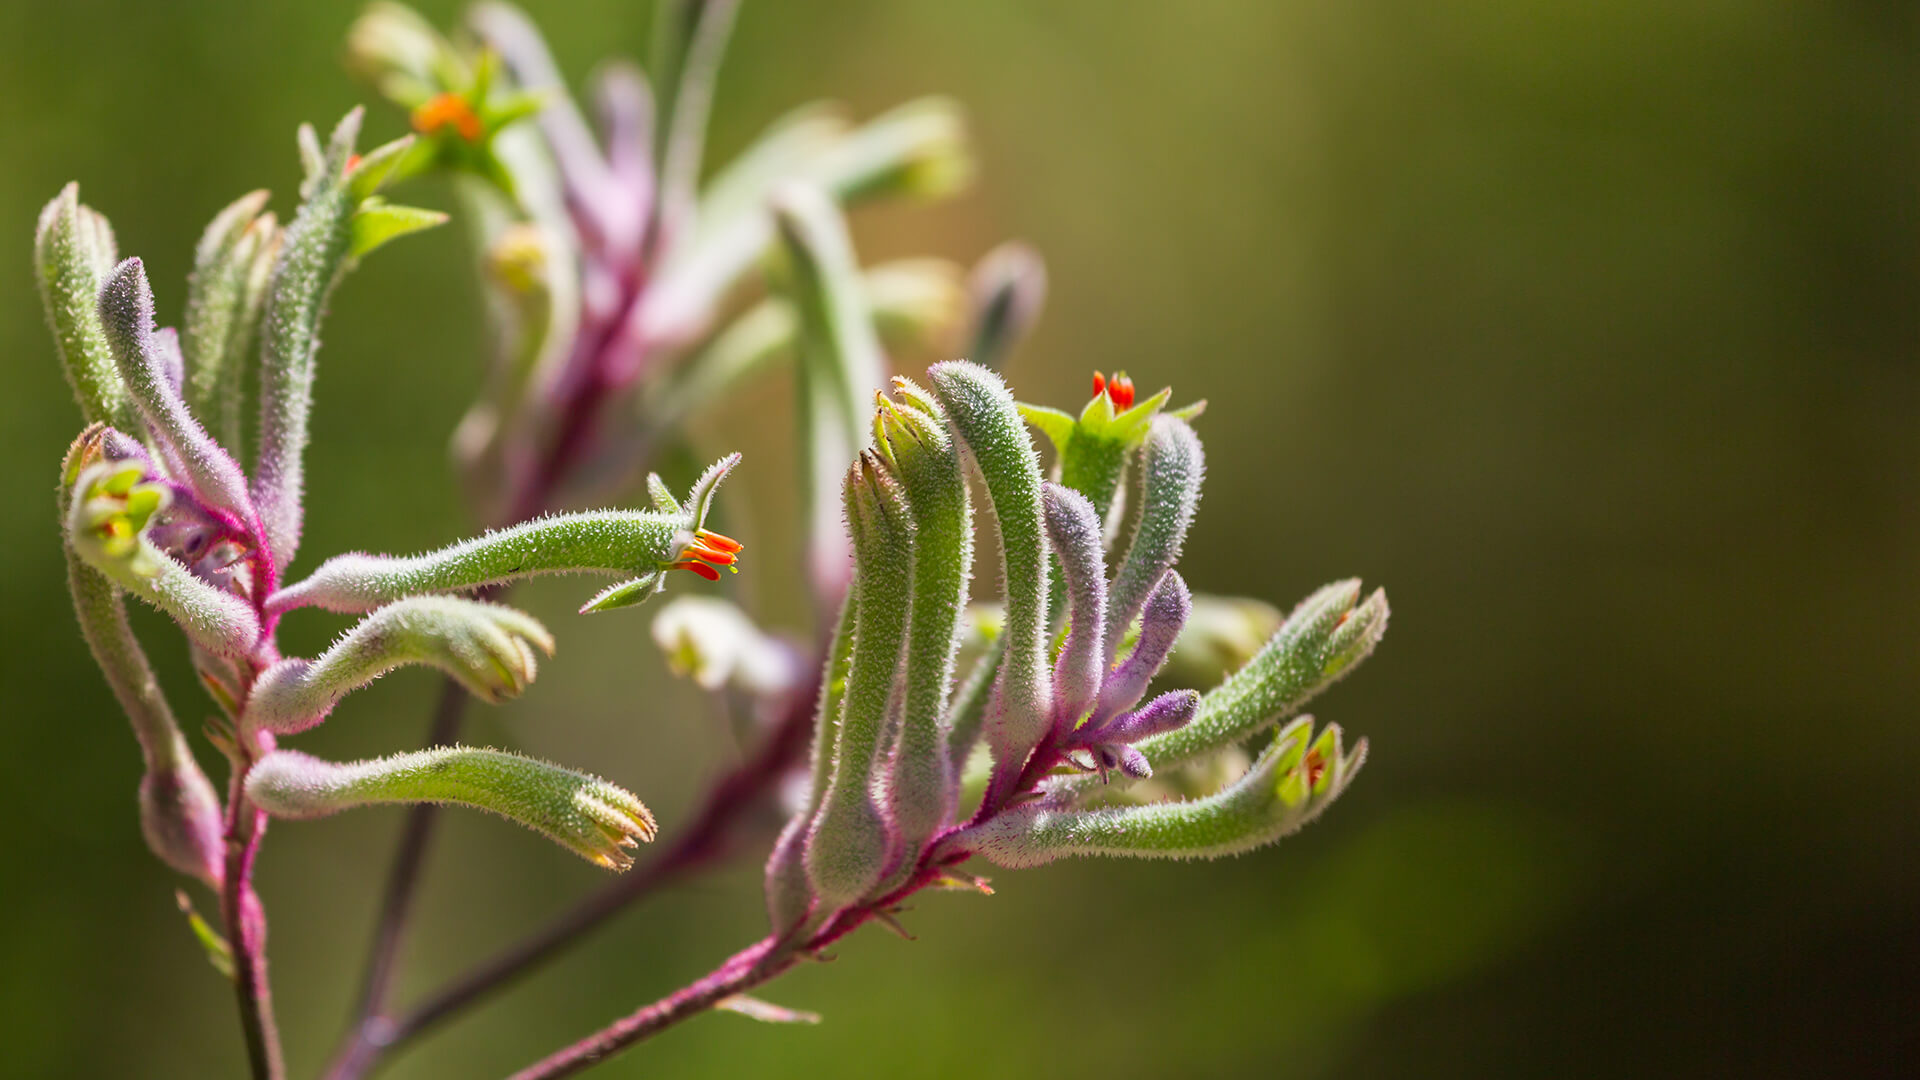 Green kangaroo paw plants with purplish-pink stems.